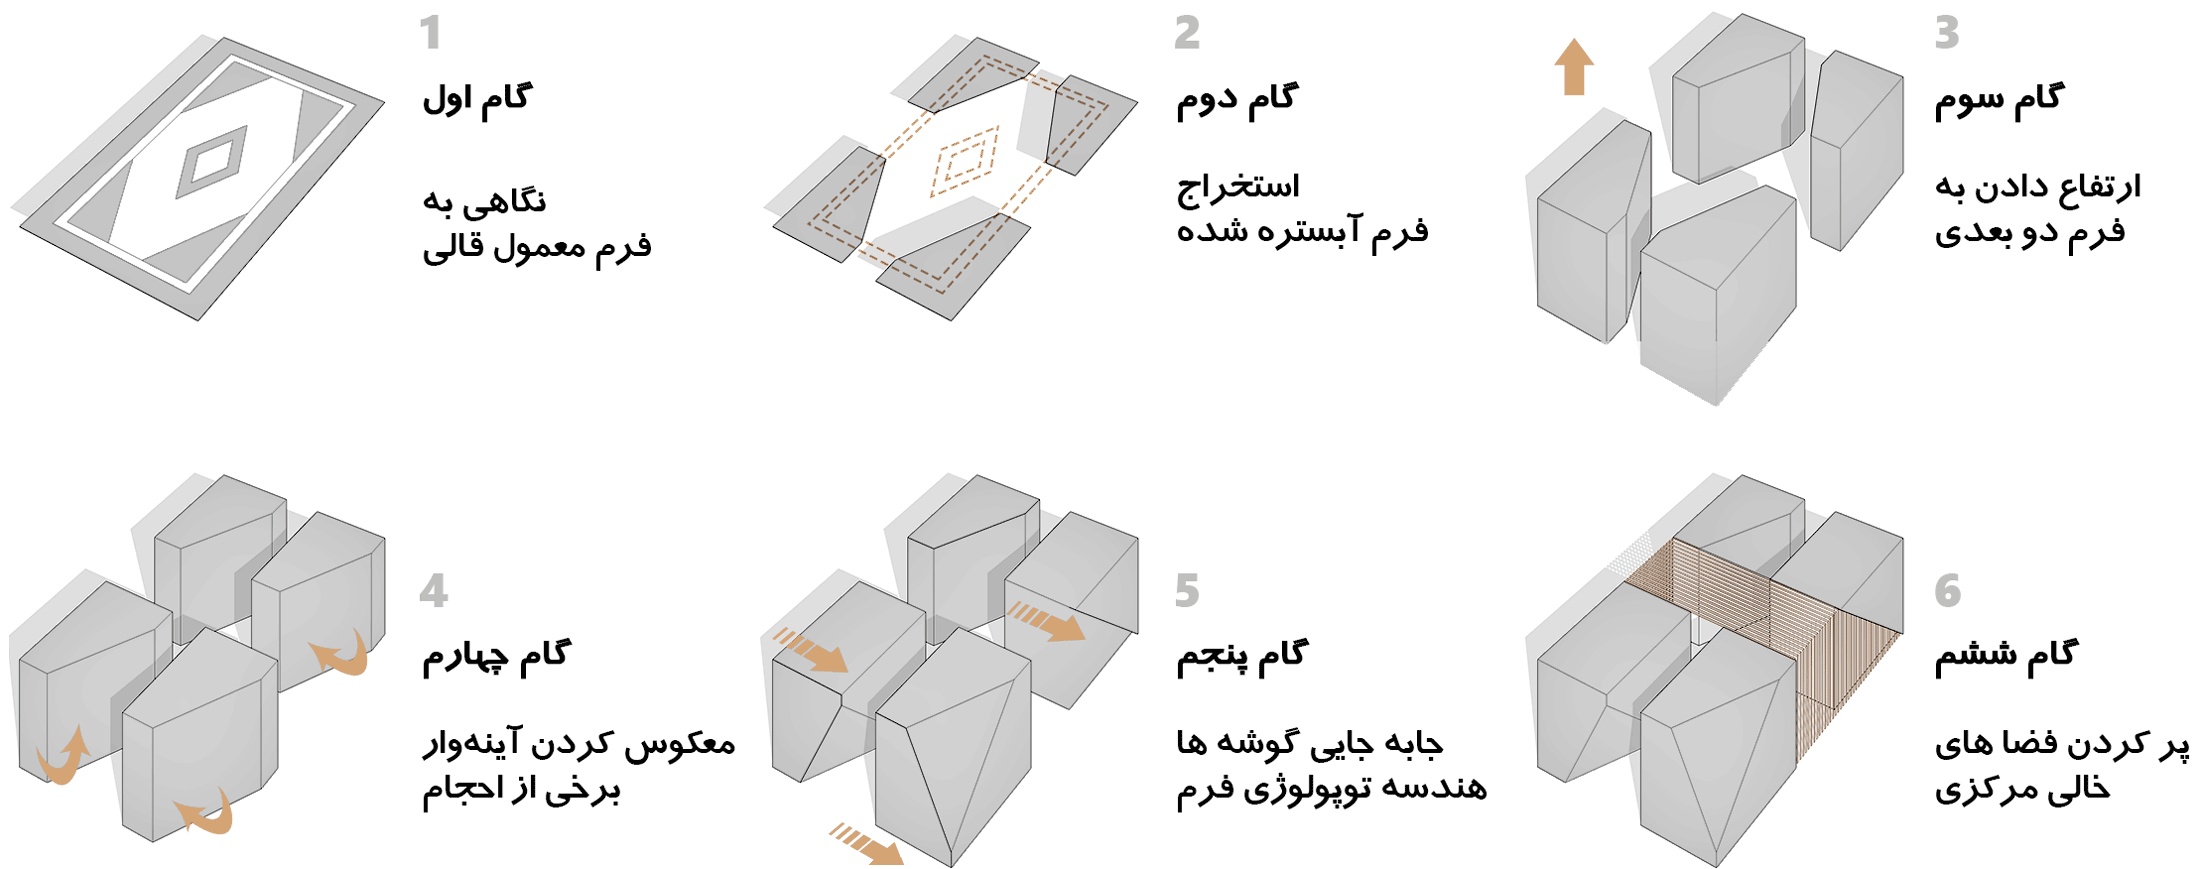 diagram A - boloori's carpet store